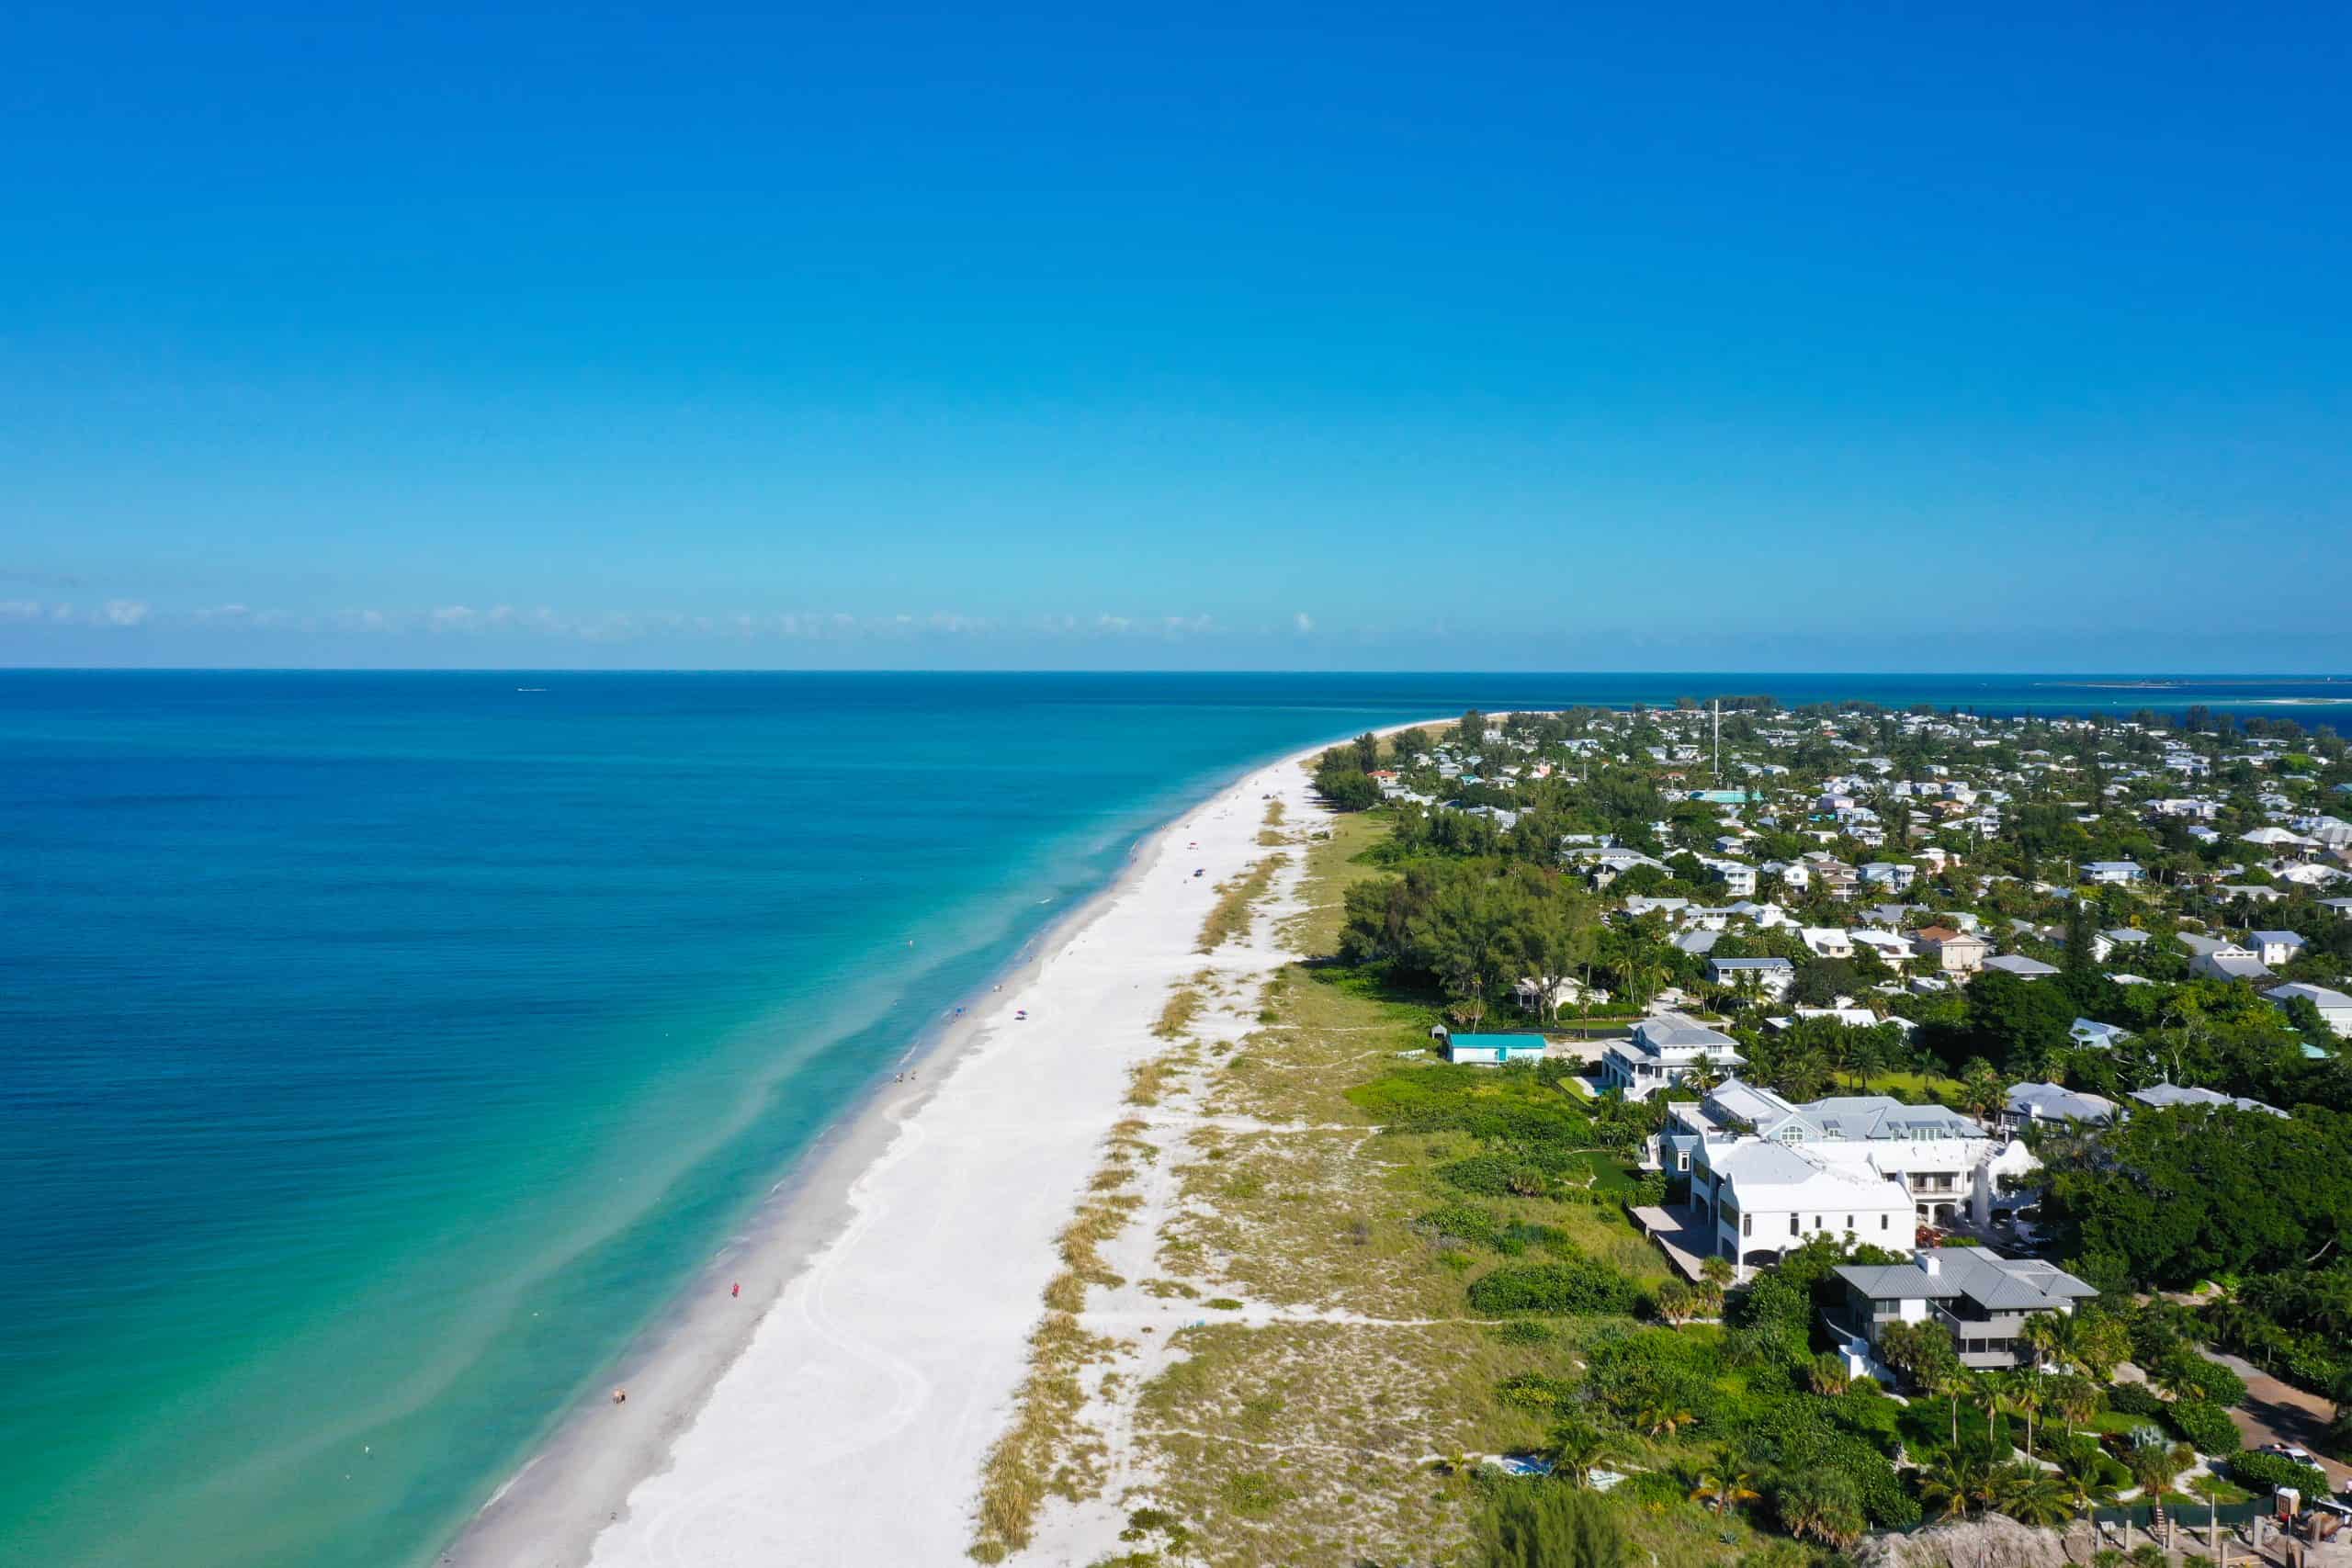 An Aerial View of the Beautiful White Sand Beach on Anna Maria Island, Florida